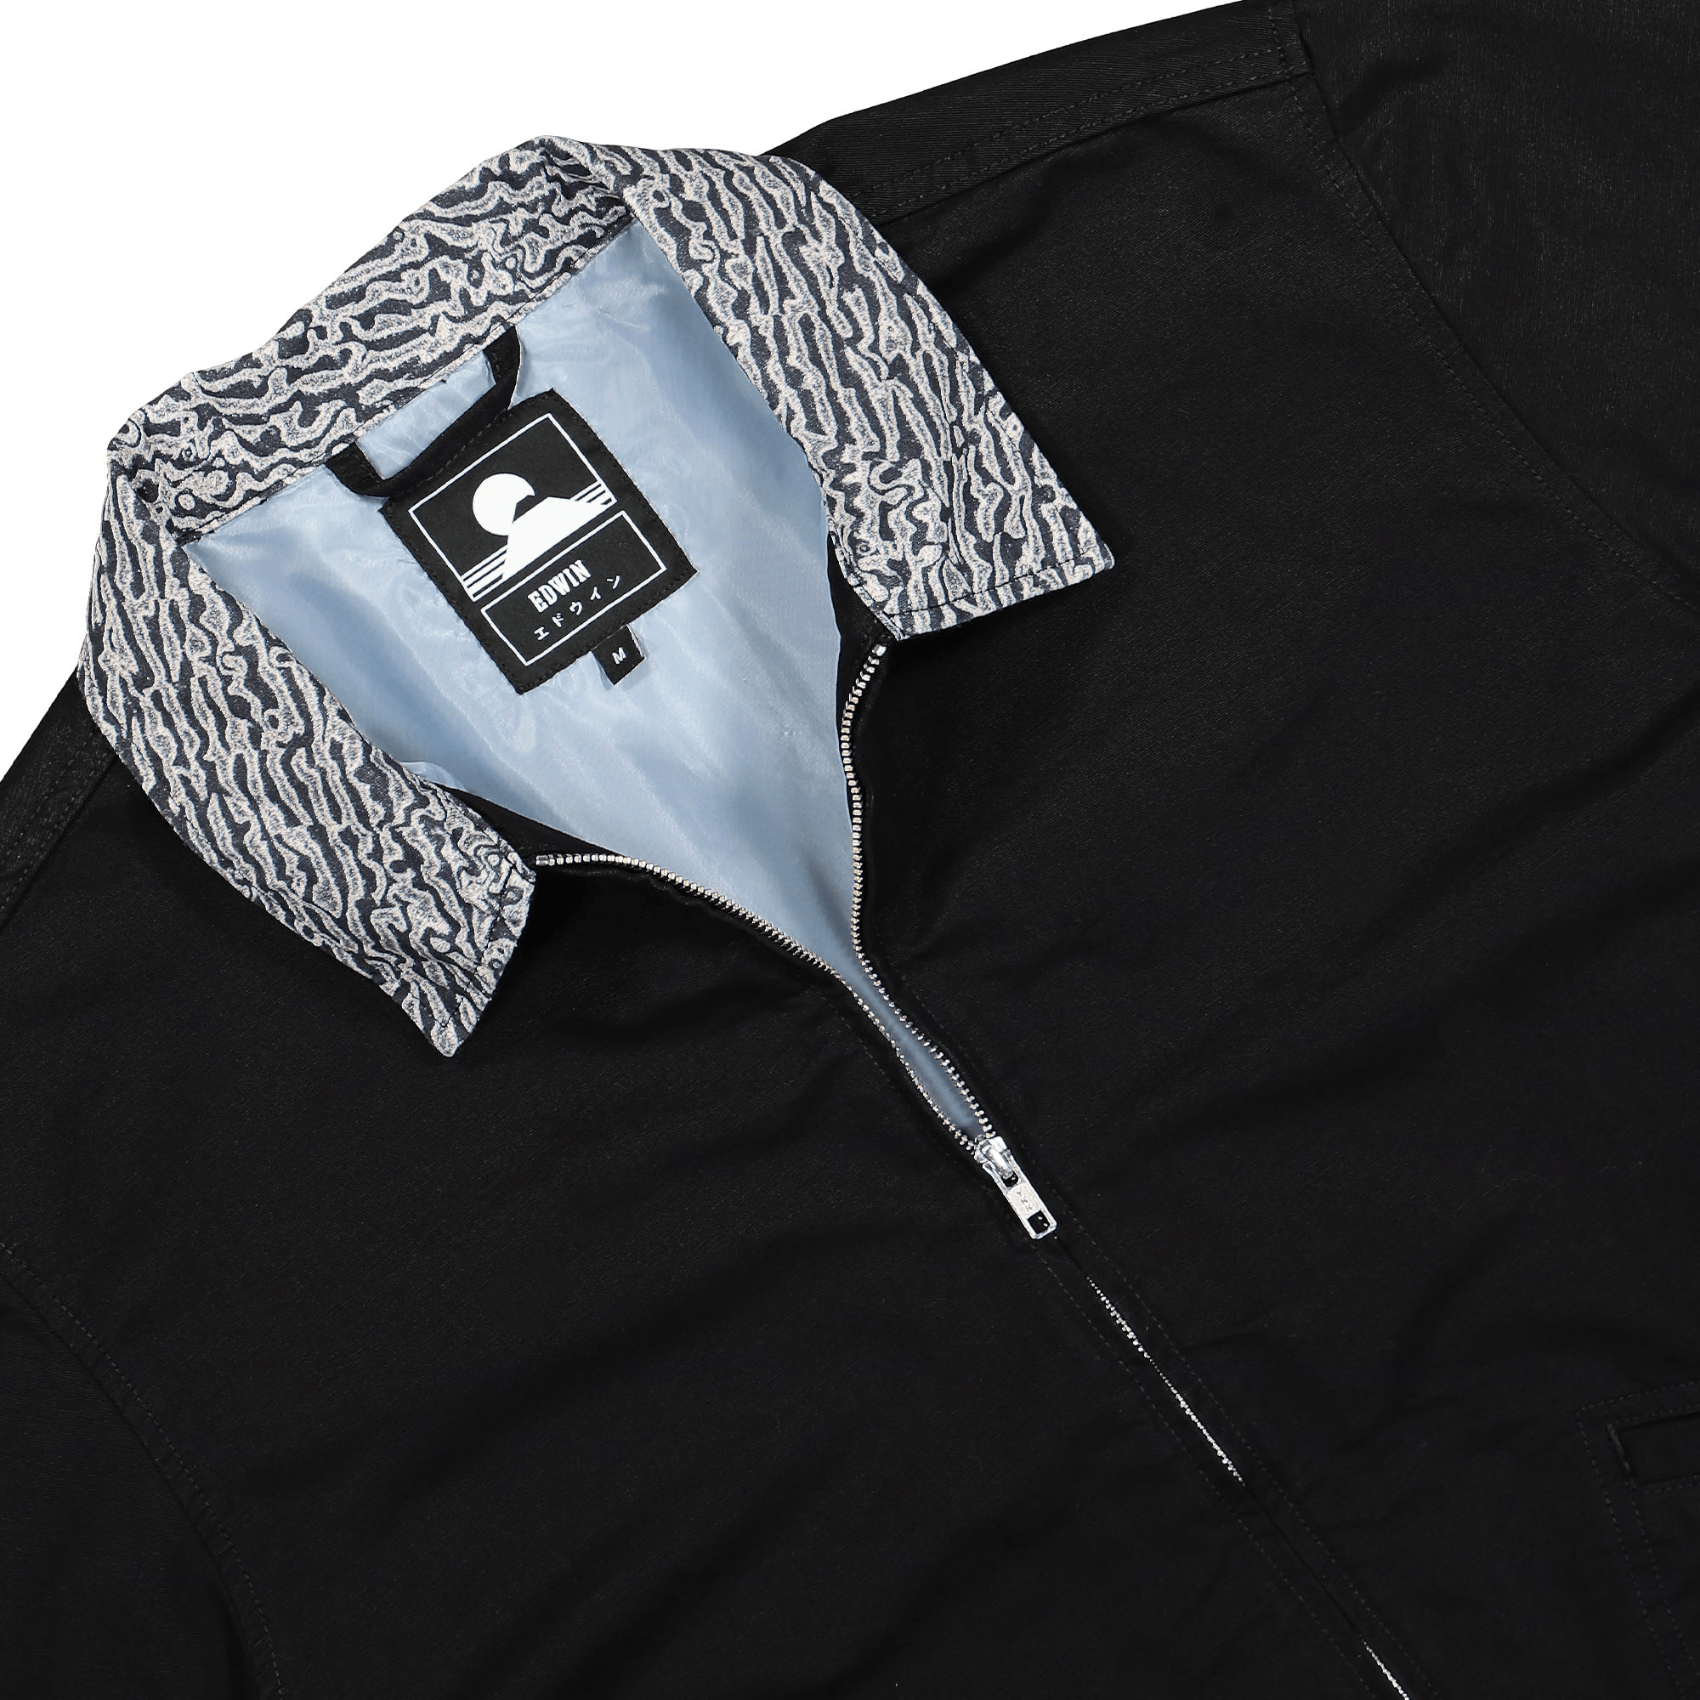 Aaren Jacket Lined - Black/Gvo Garment Washed